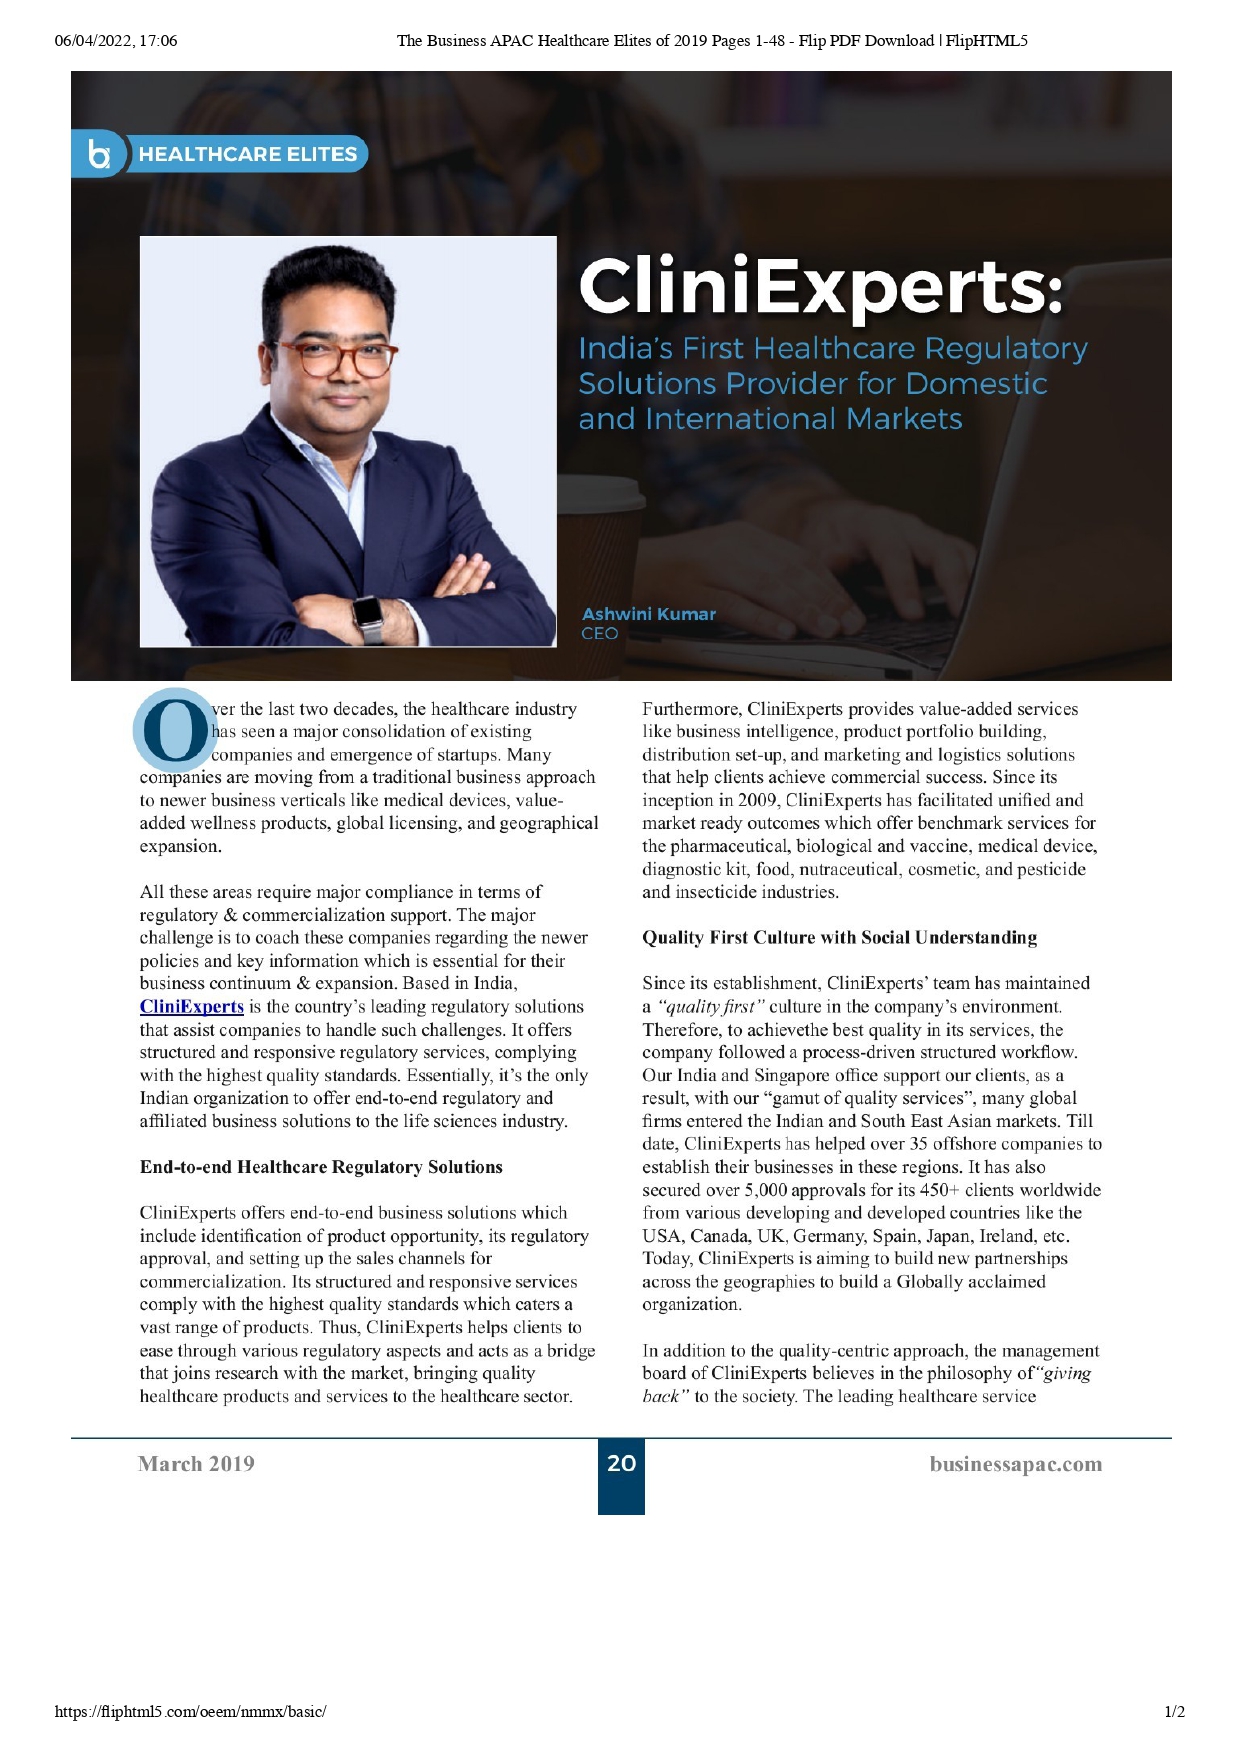 Cliniexperts Business APAC